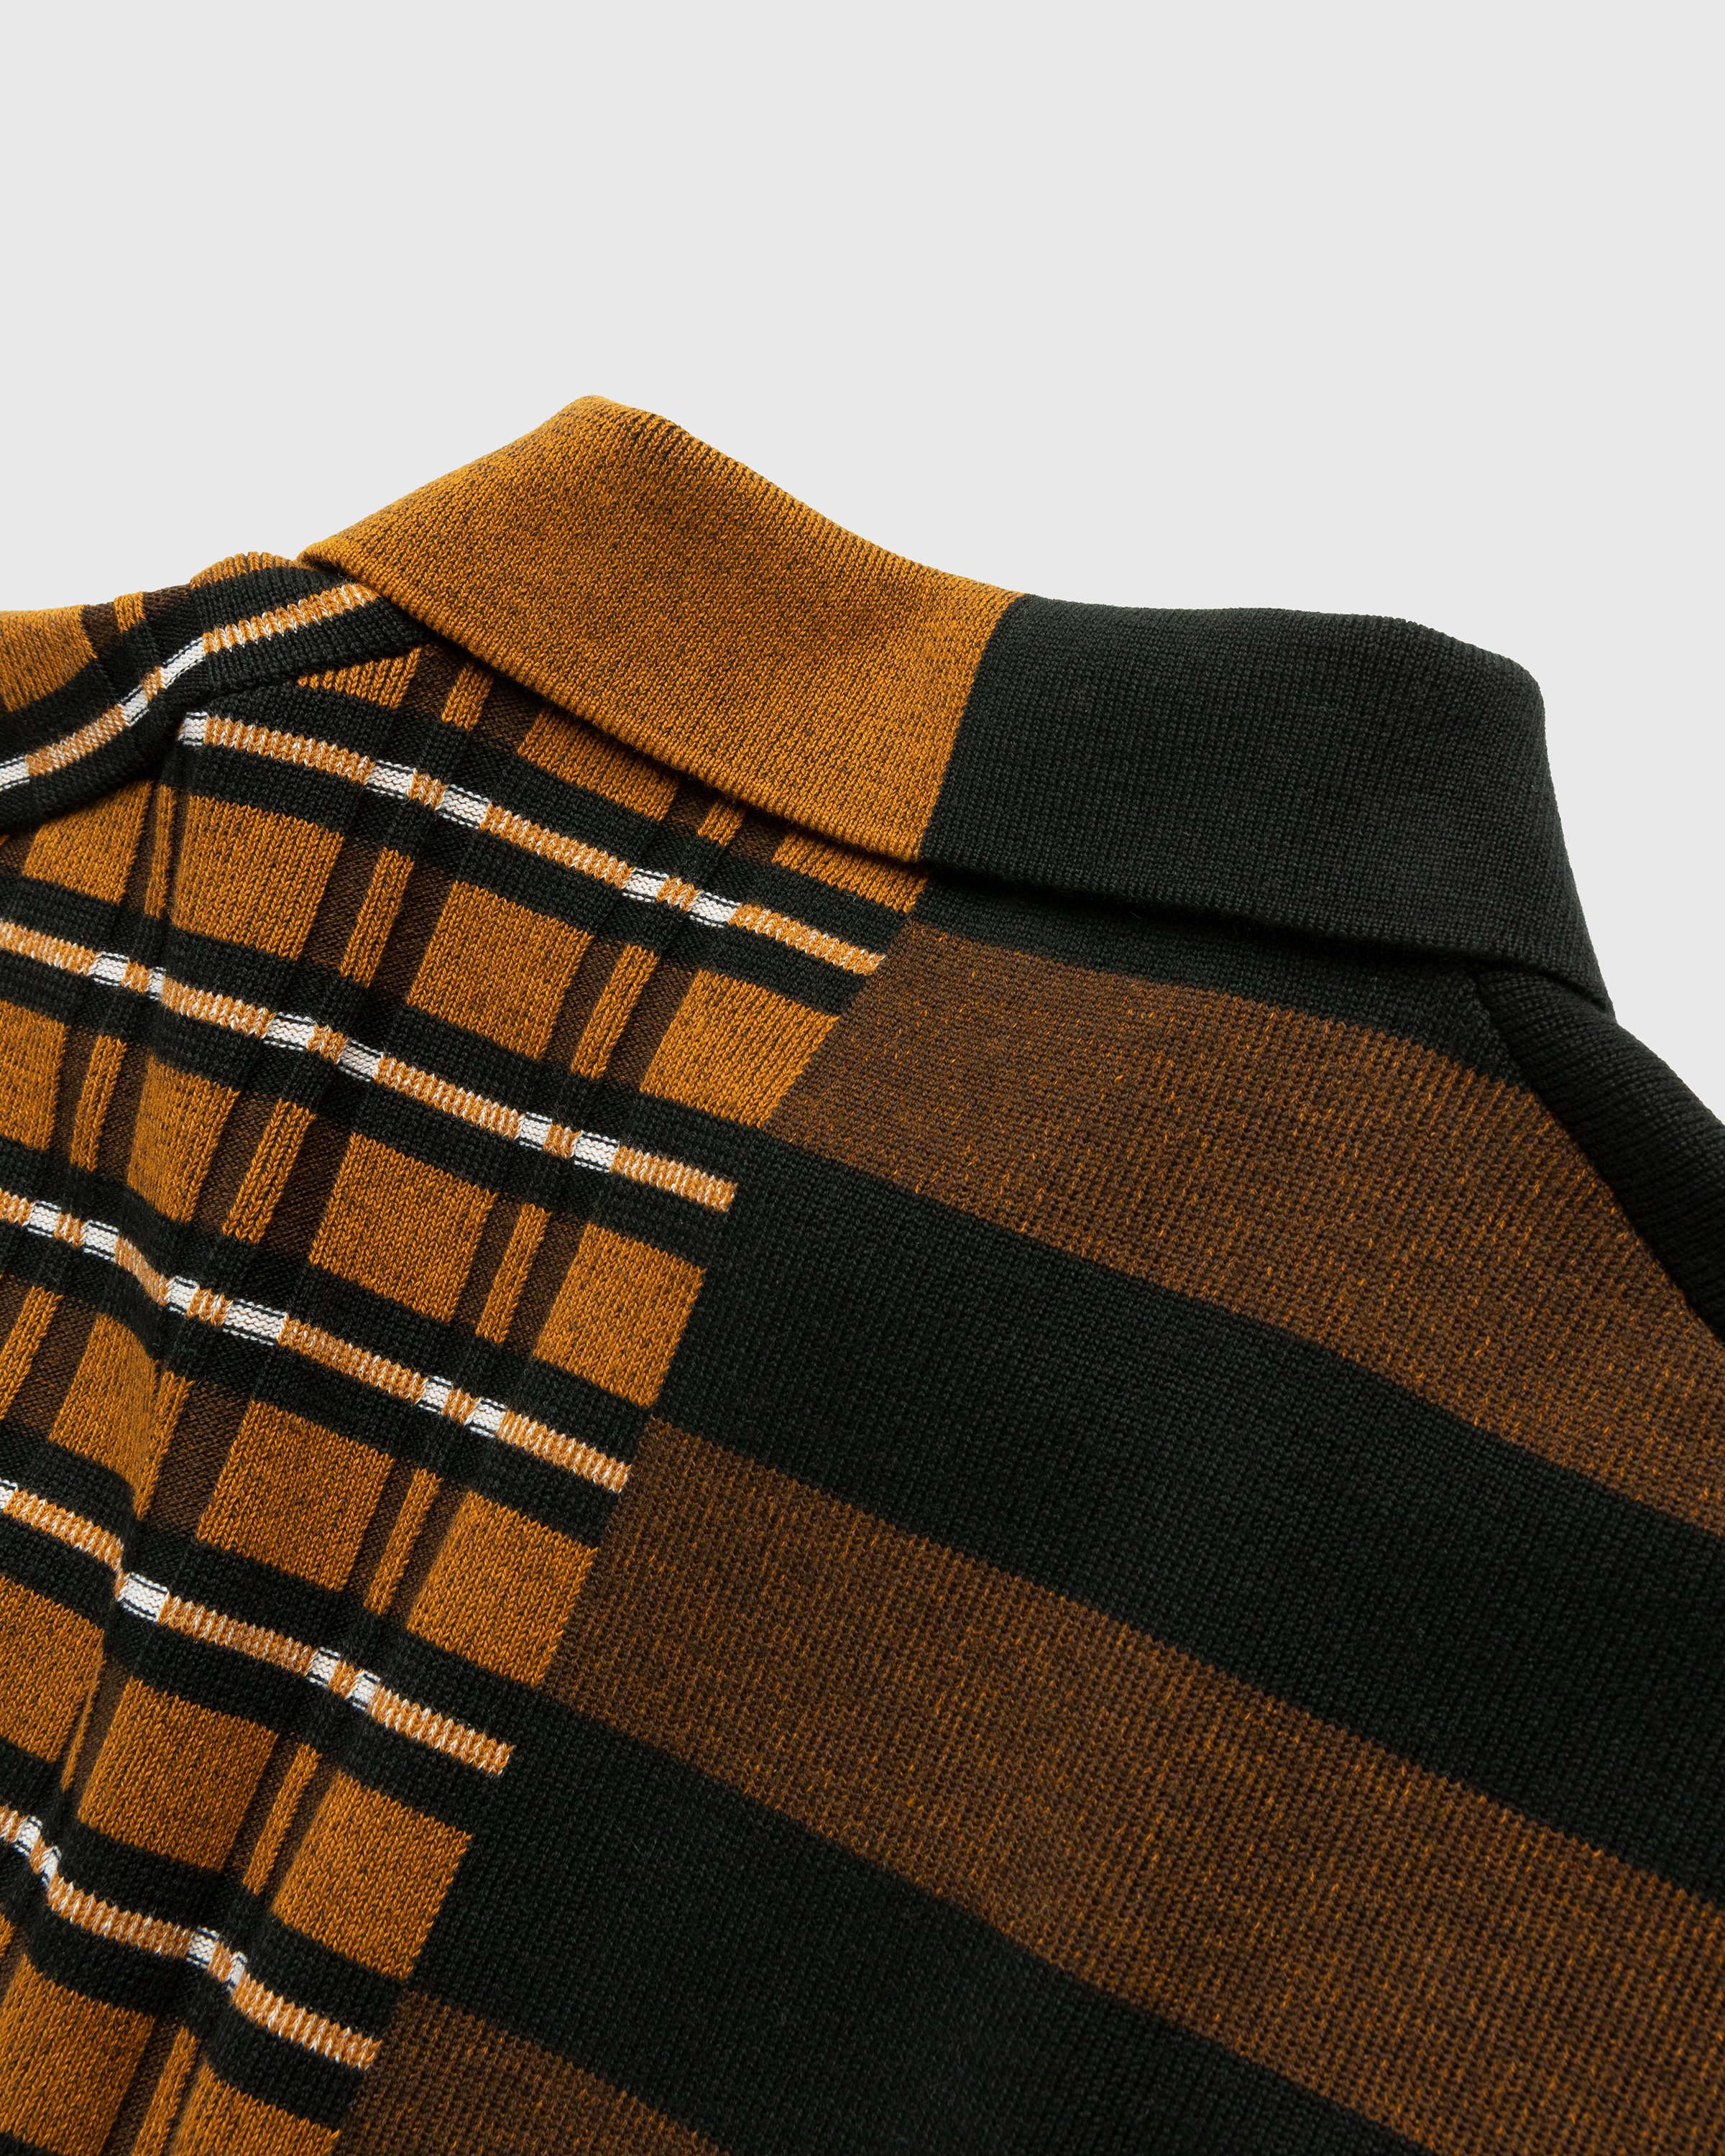 Kenzo - Striped Merino Wool Polo Dark Camel - Clothing - Brown - Image 7